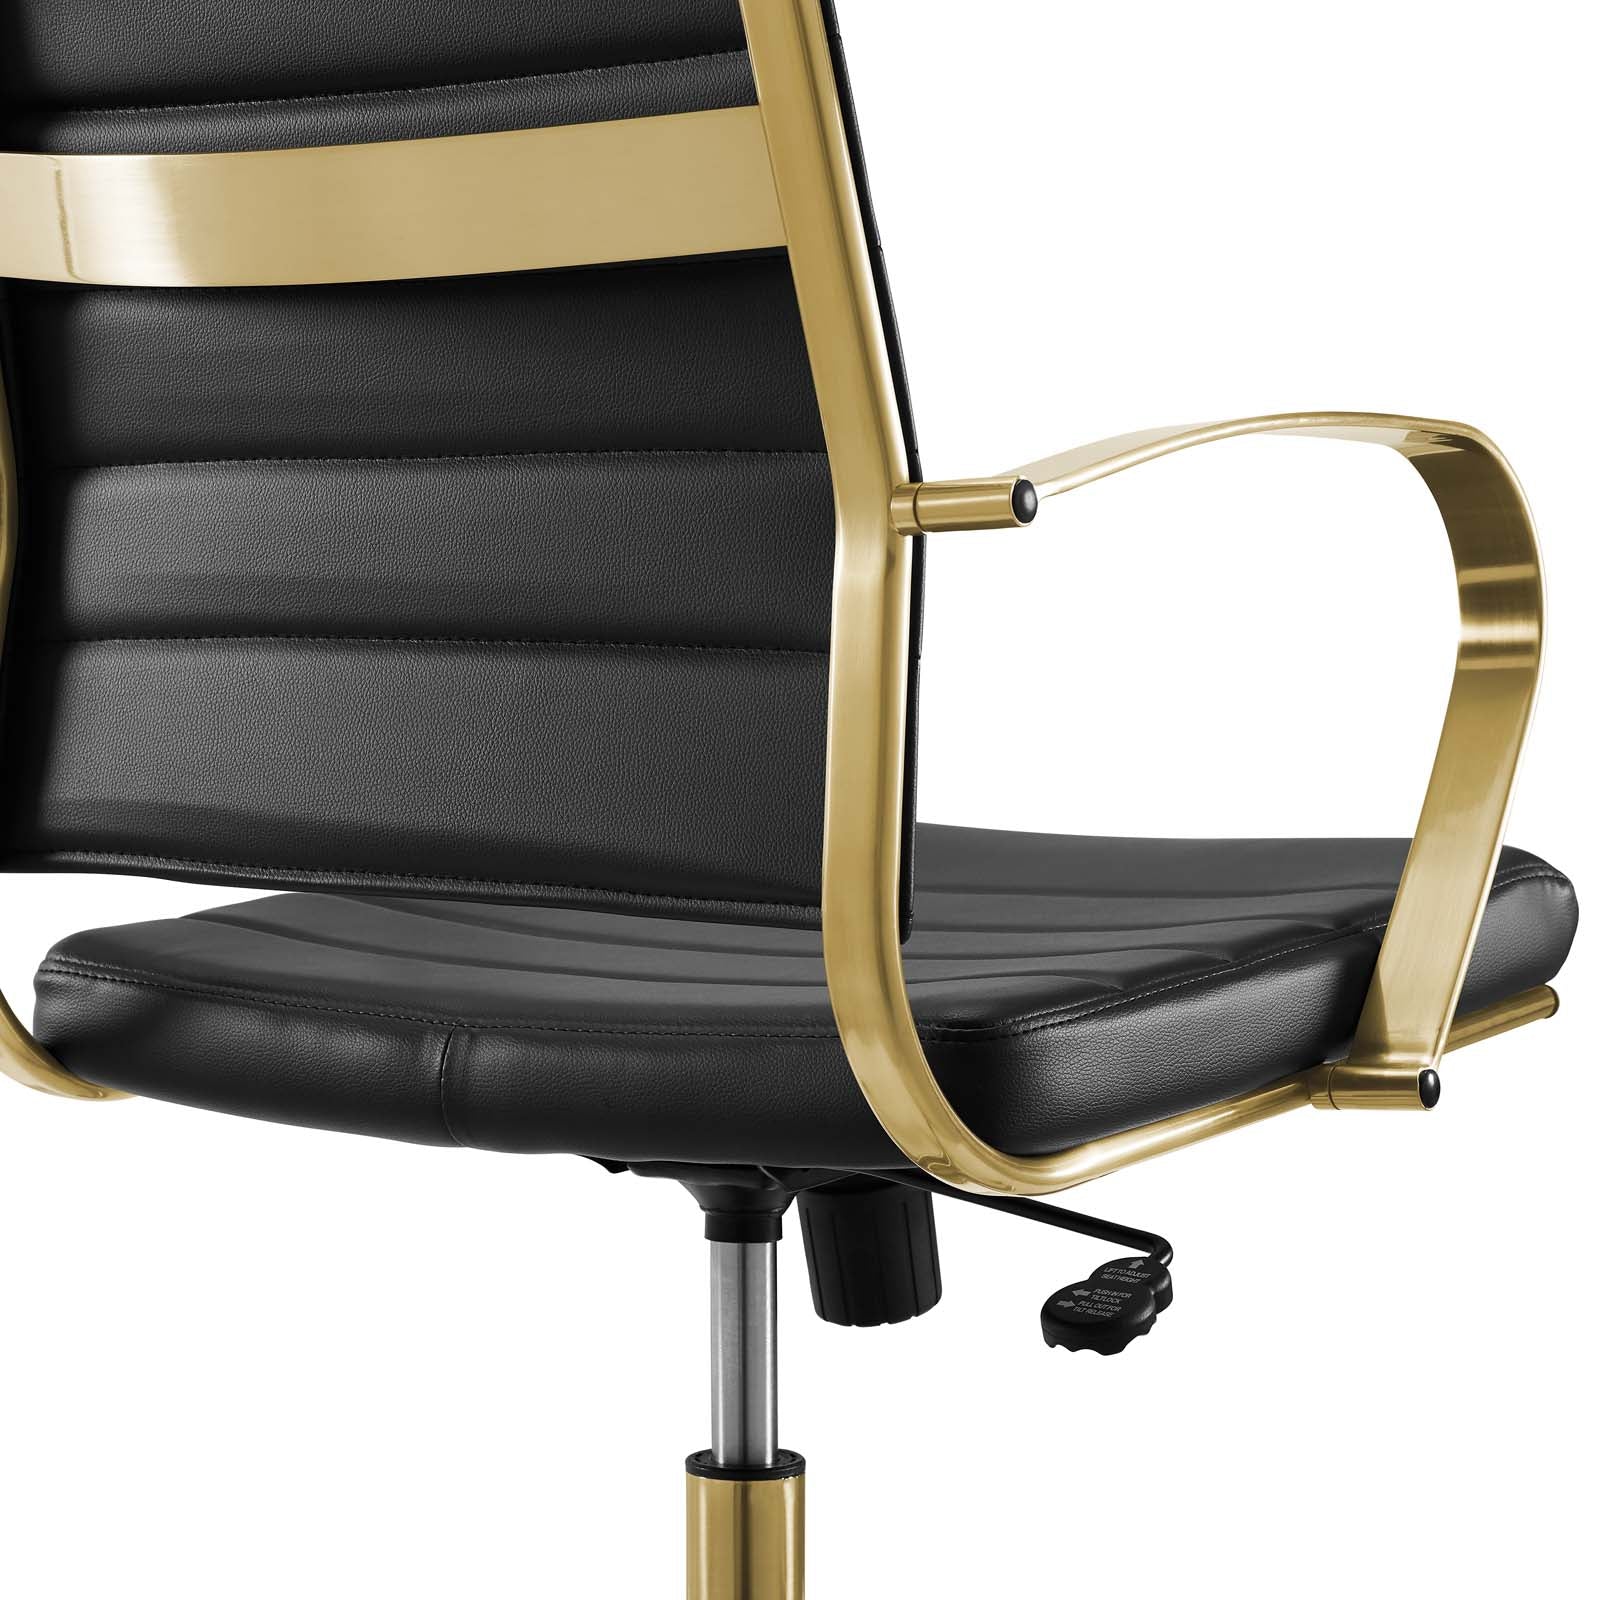 Jive Gold High Back Office Chair - Black